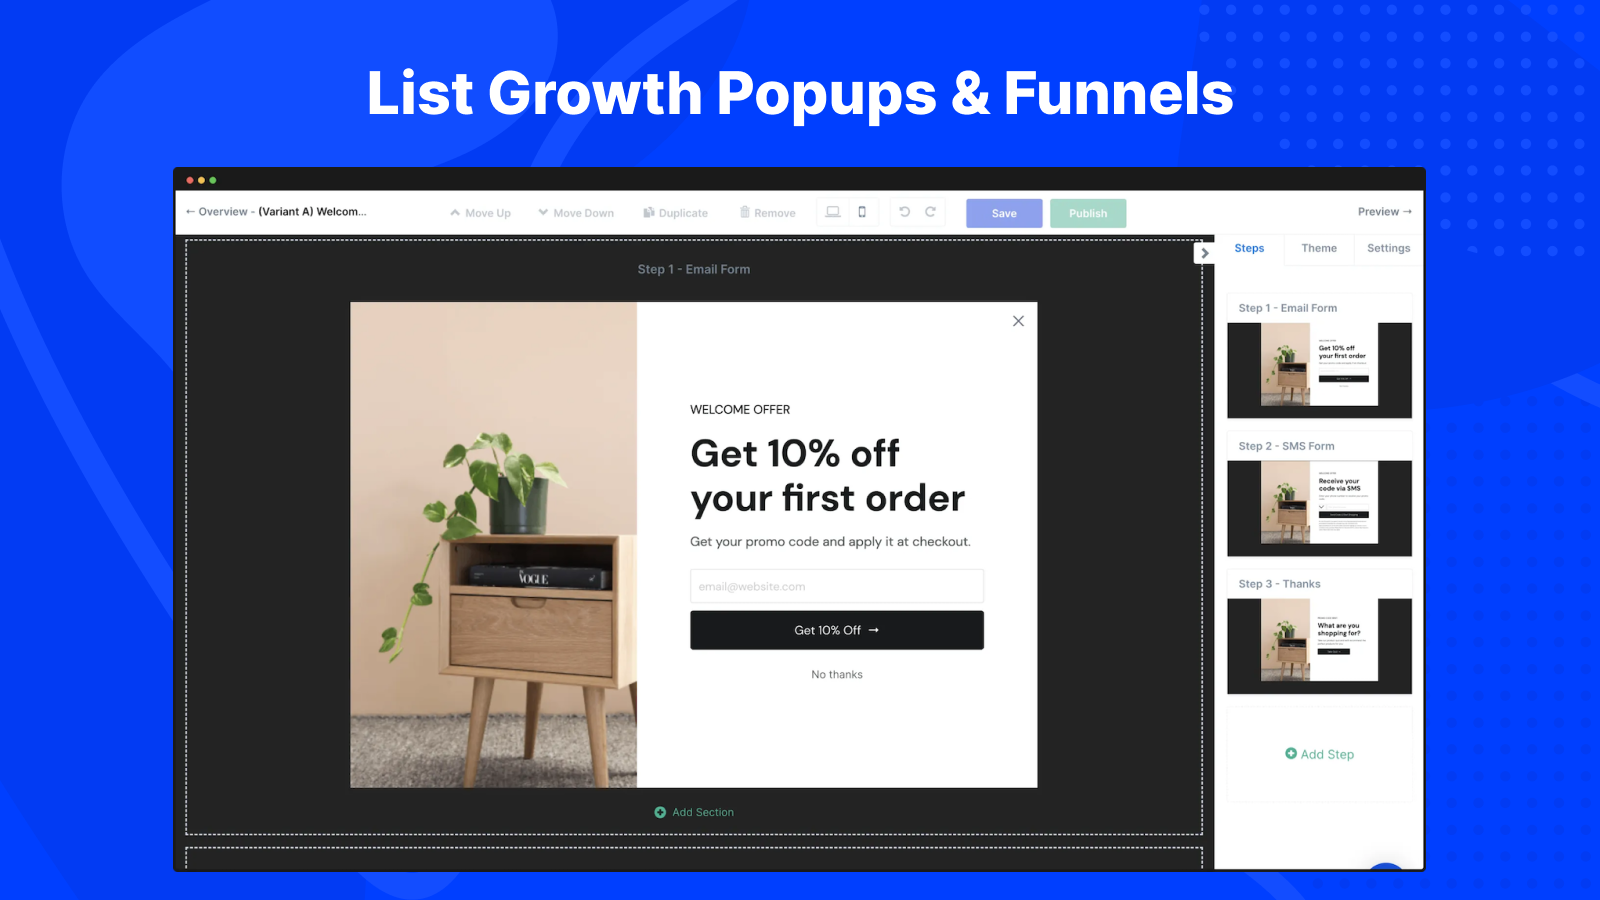 List Growth Popups & Funnels